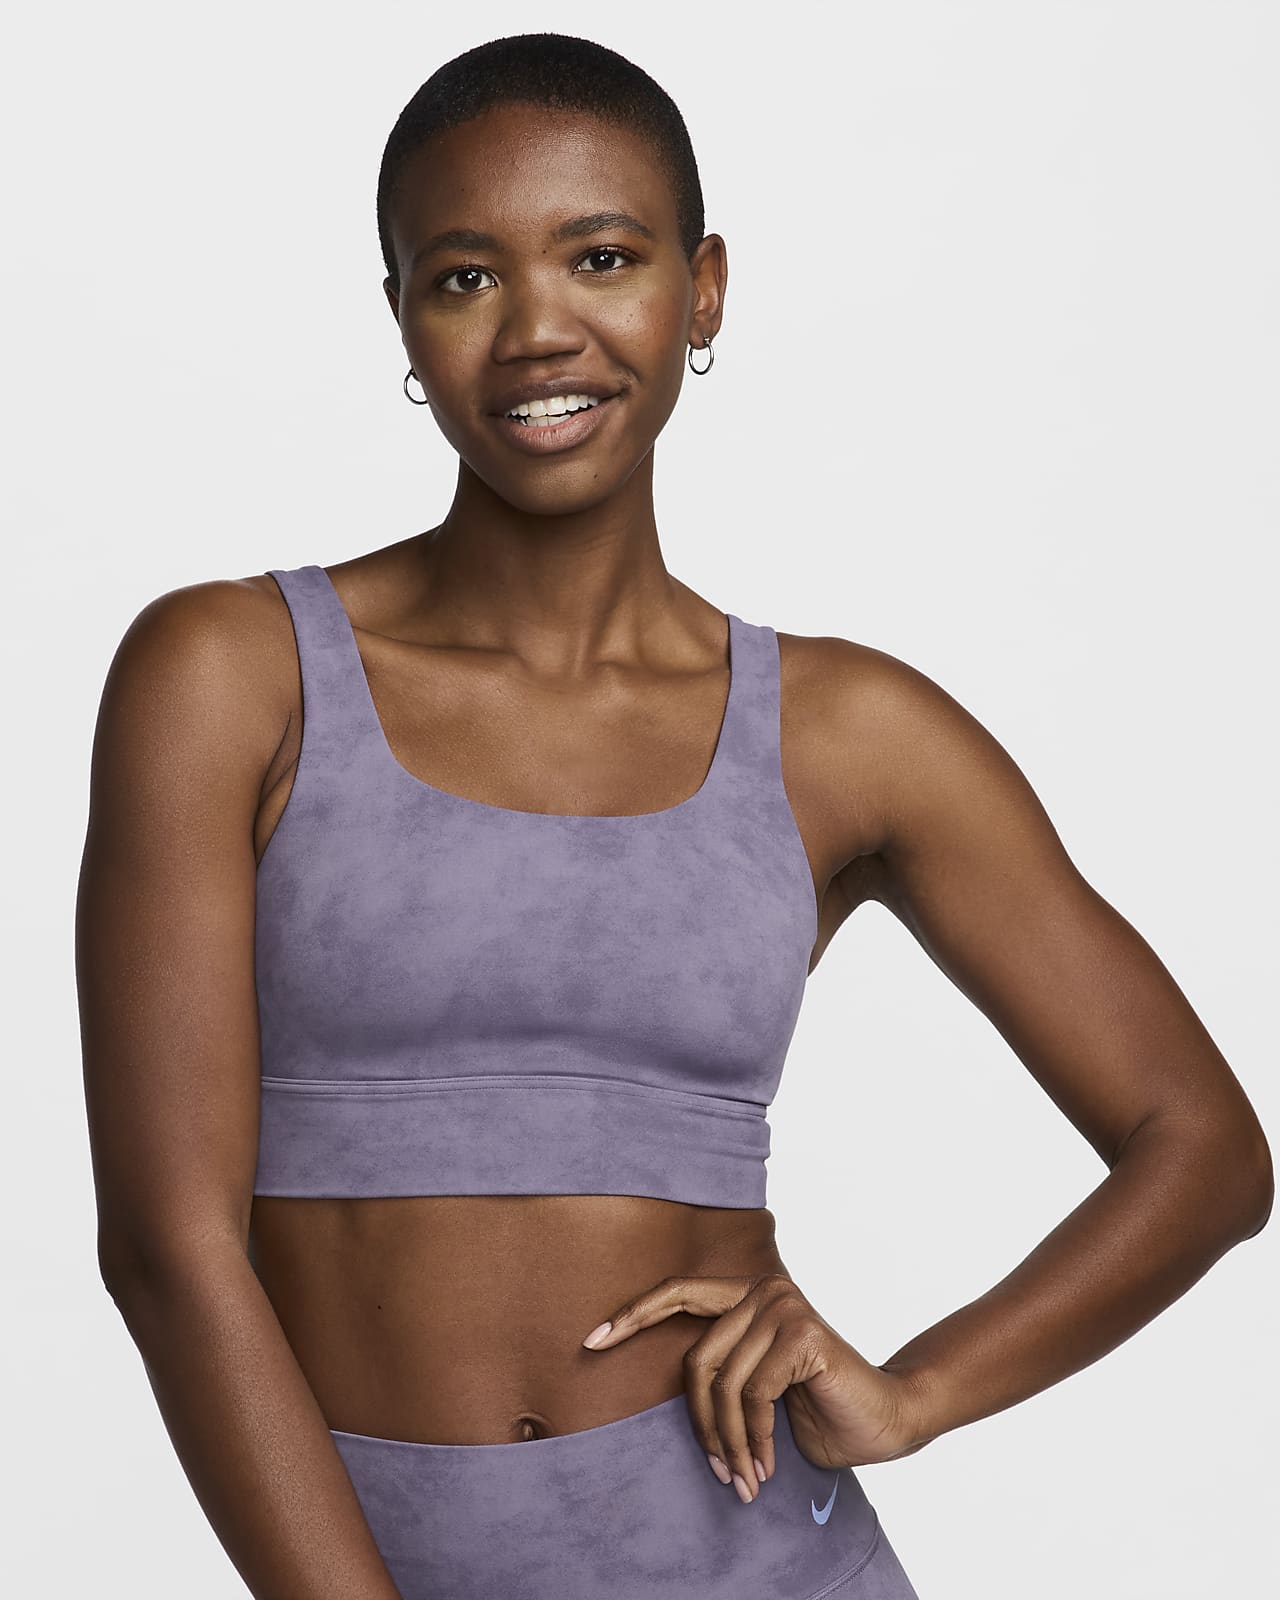 Nike Dri Fit Purple Tie Dye Athletic Compression Sports Bra Women